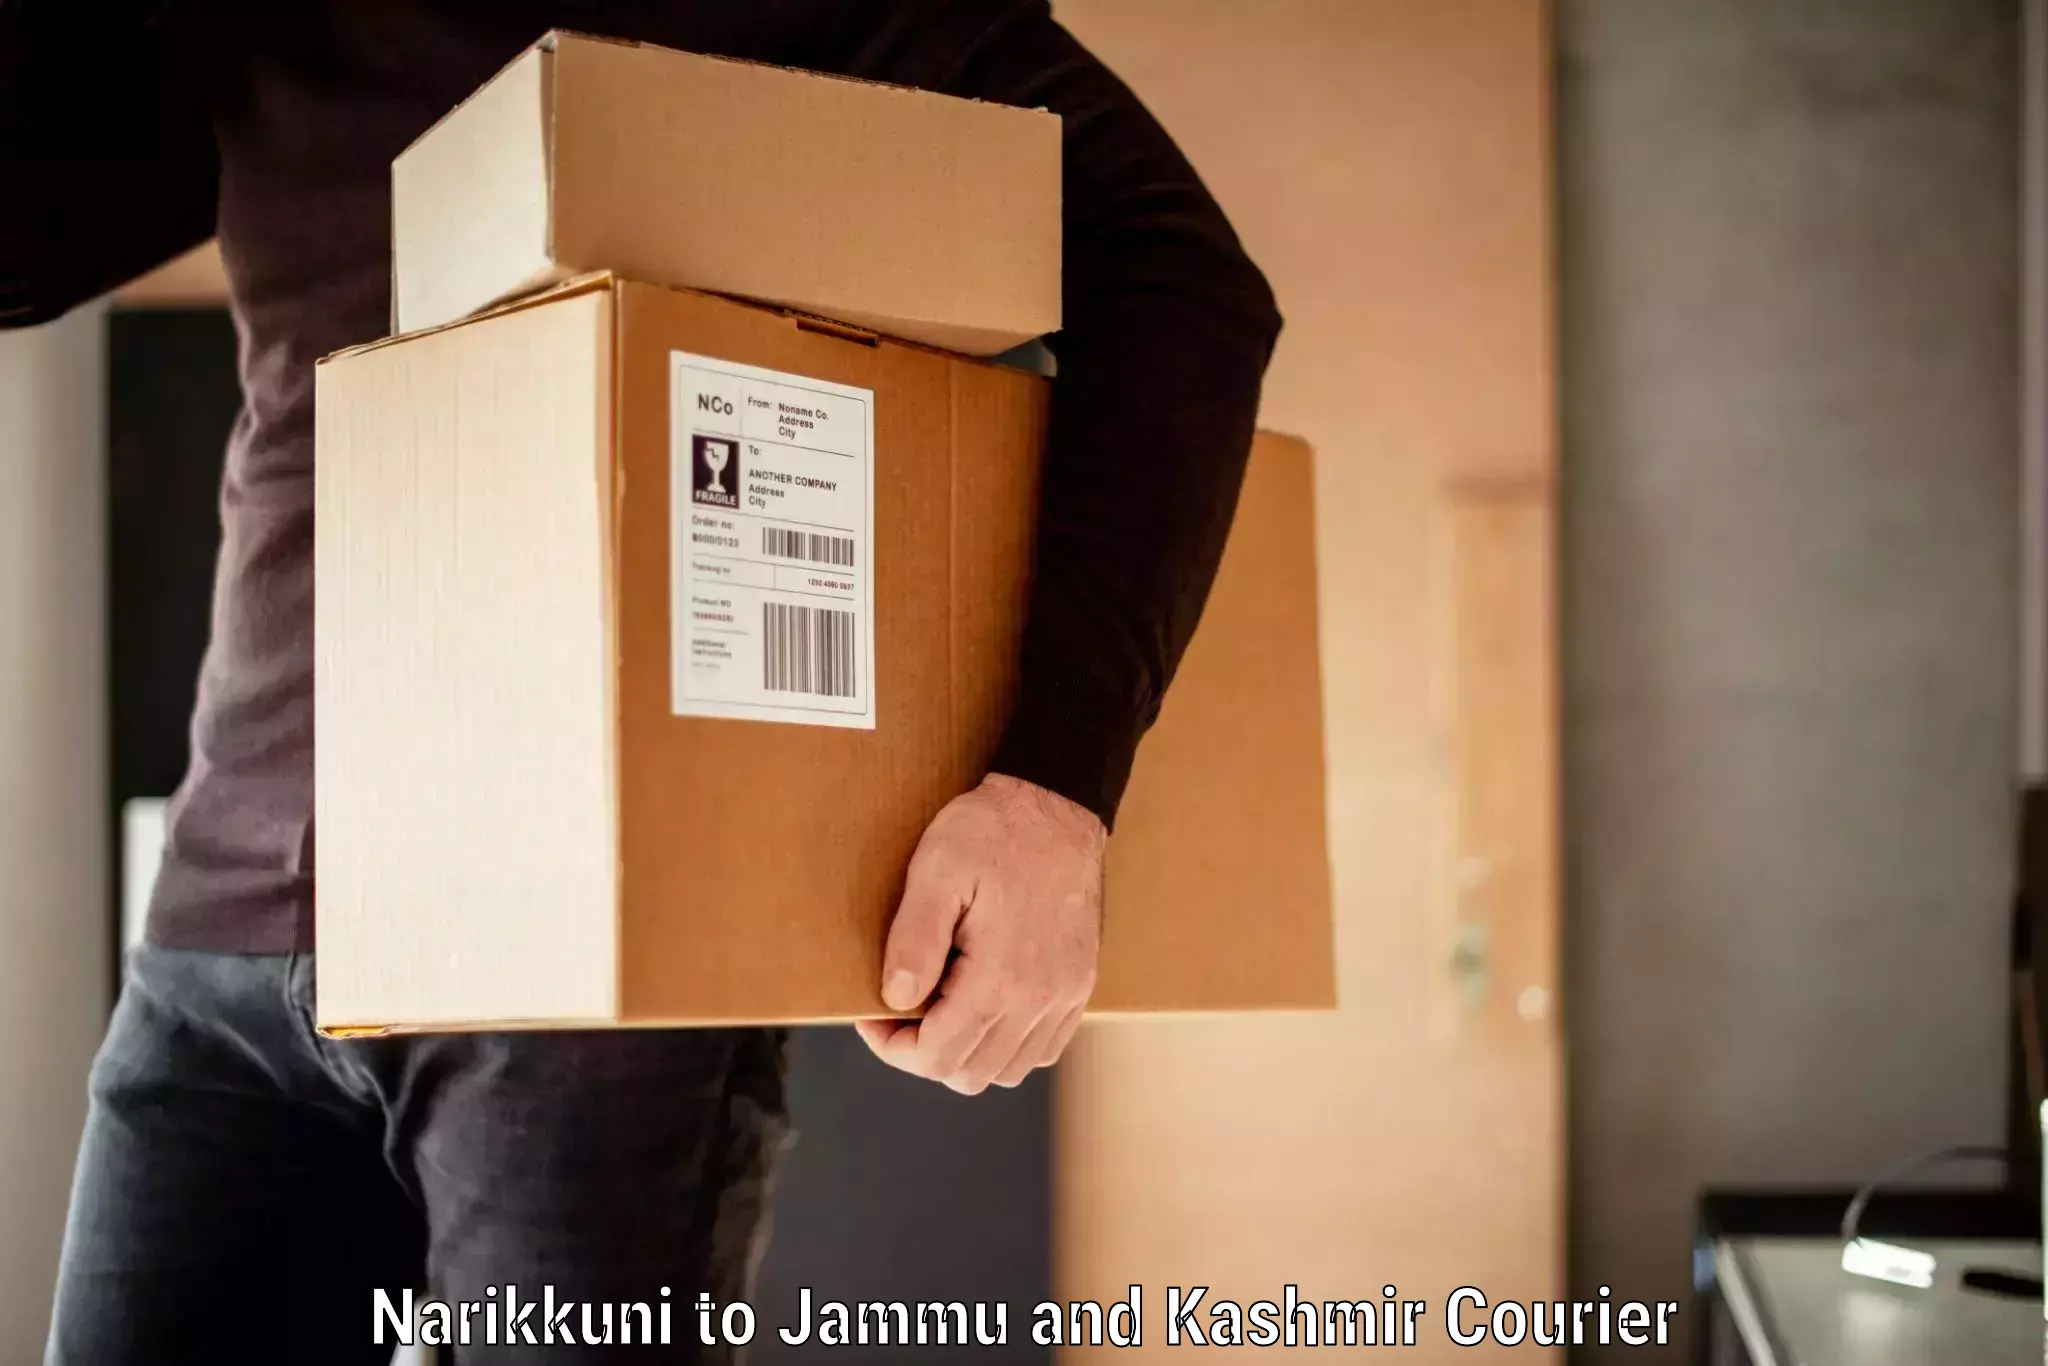 Baggage delivery technology Narikkuni to Jammu and Kashmir